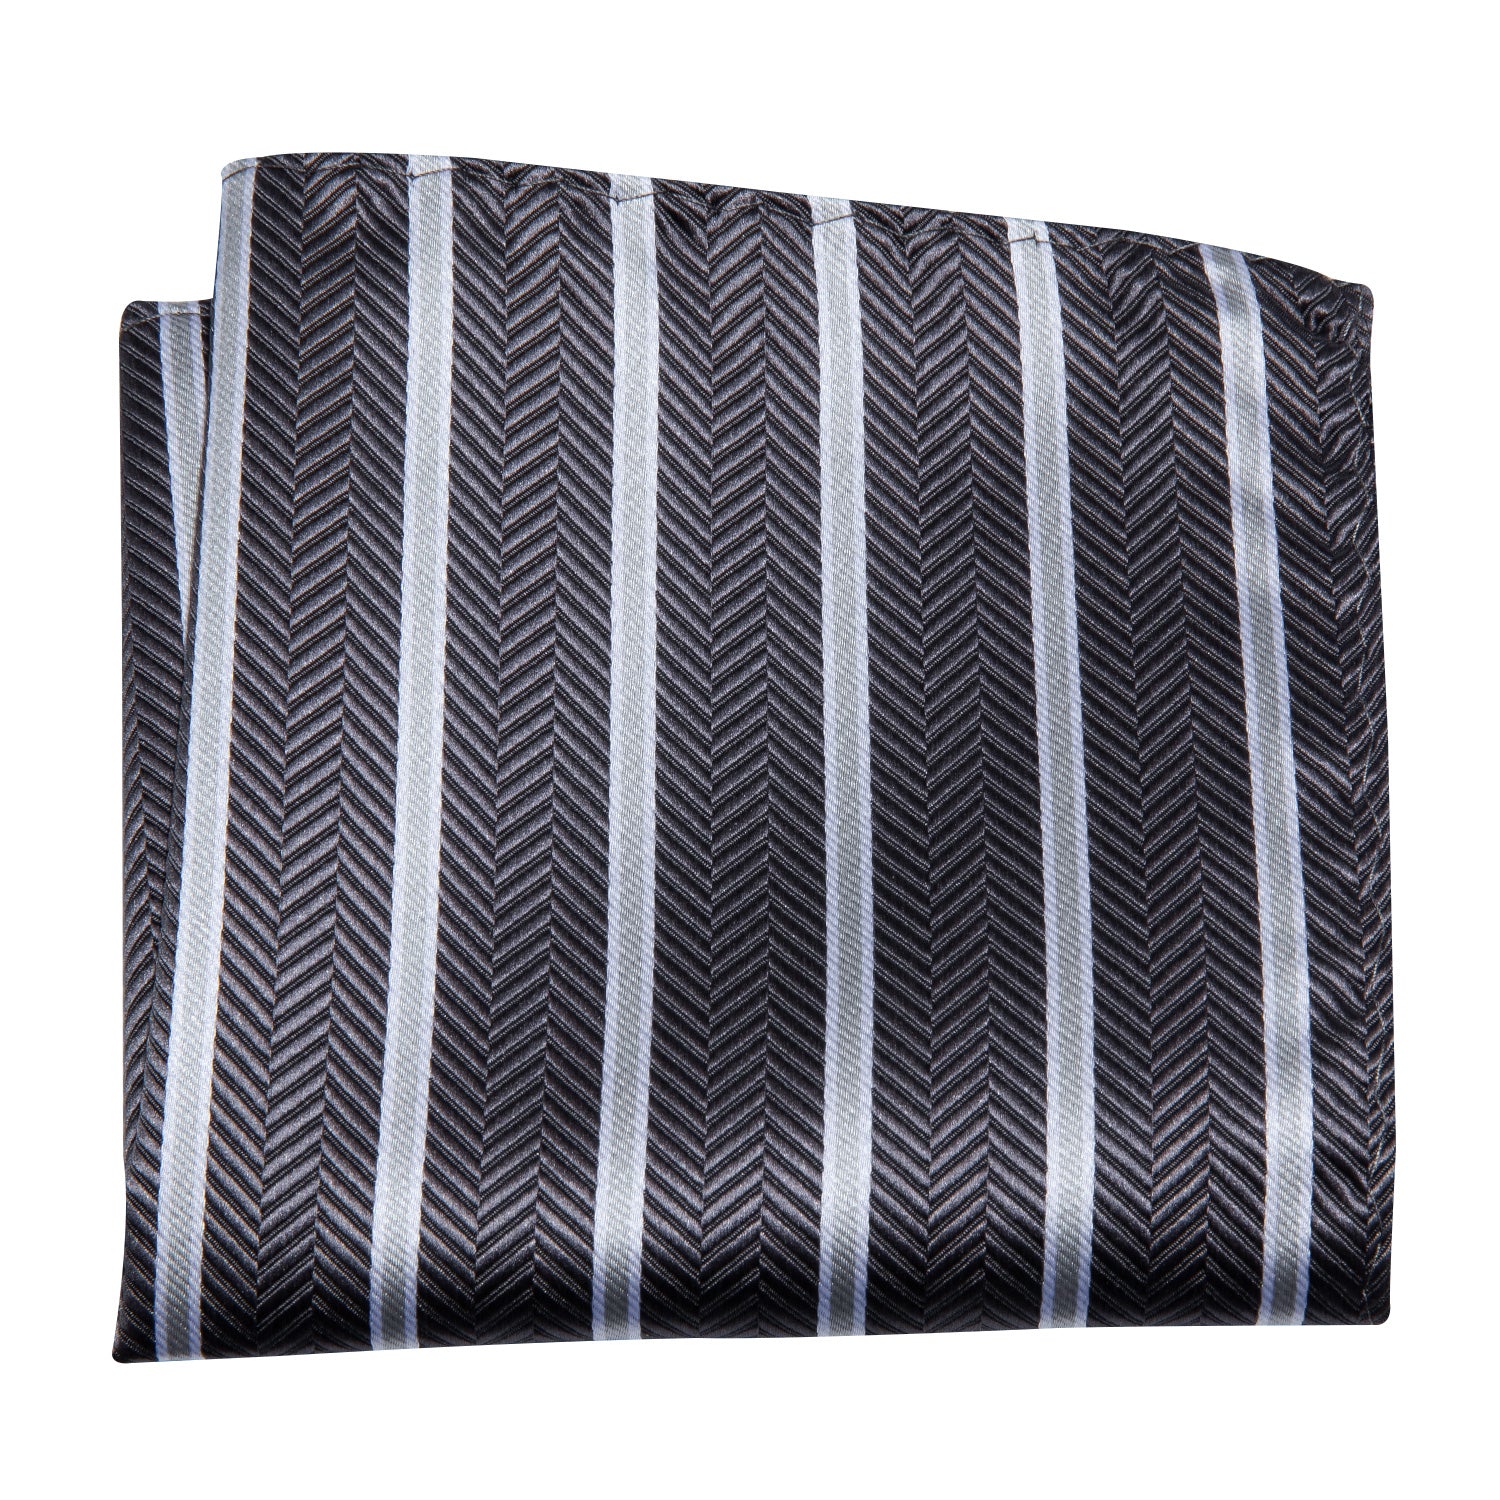 Black White Stripe Pre-tied Bow Tie Hanky Cufflinks Set